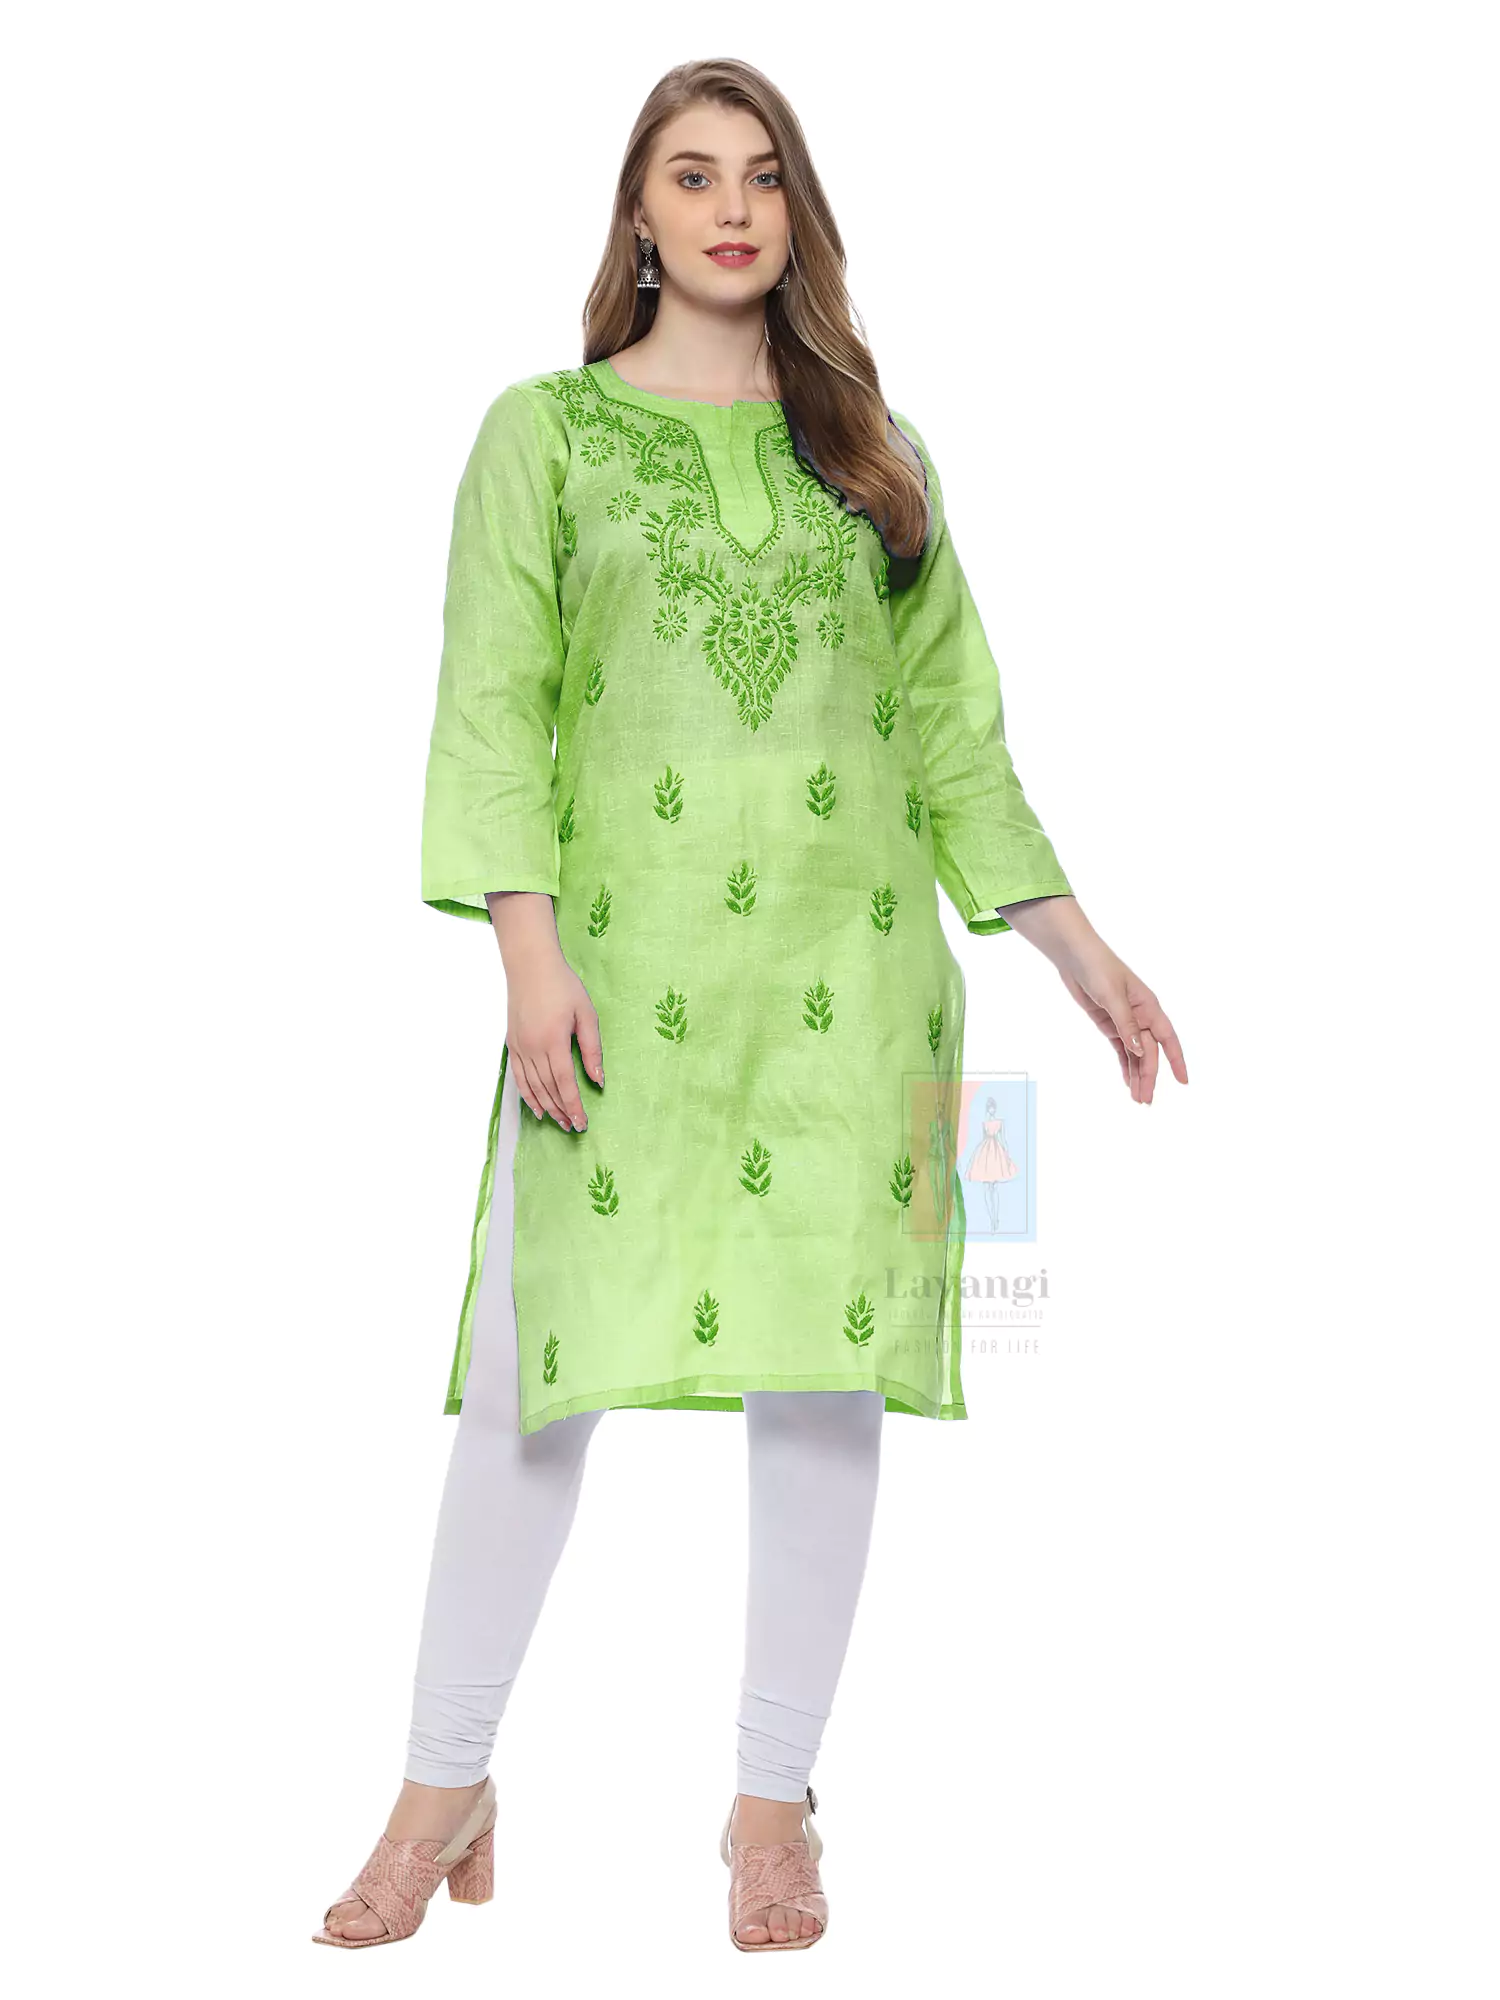 Lavangi Women Lucknow Chikankari Jute Cotton Light Green Kurti